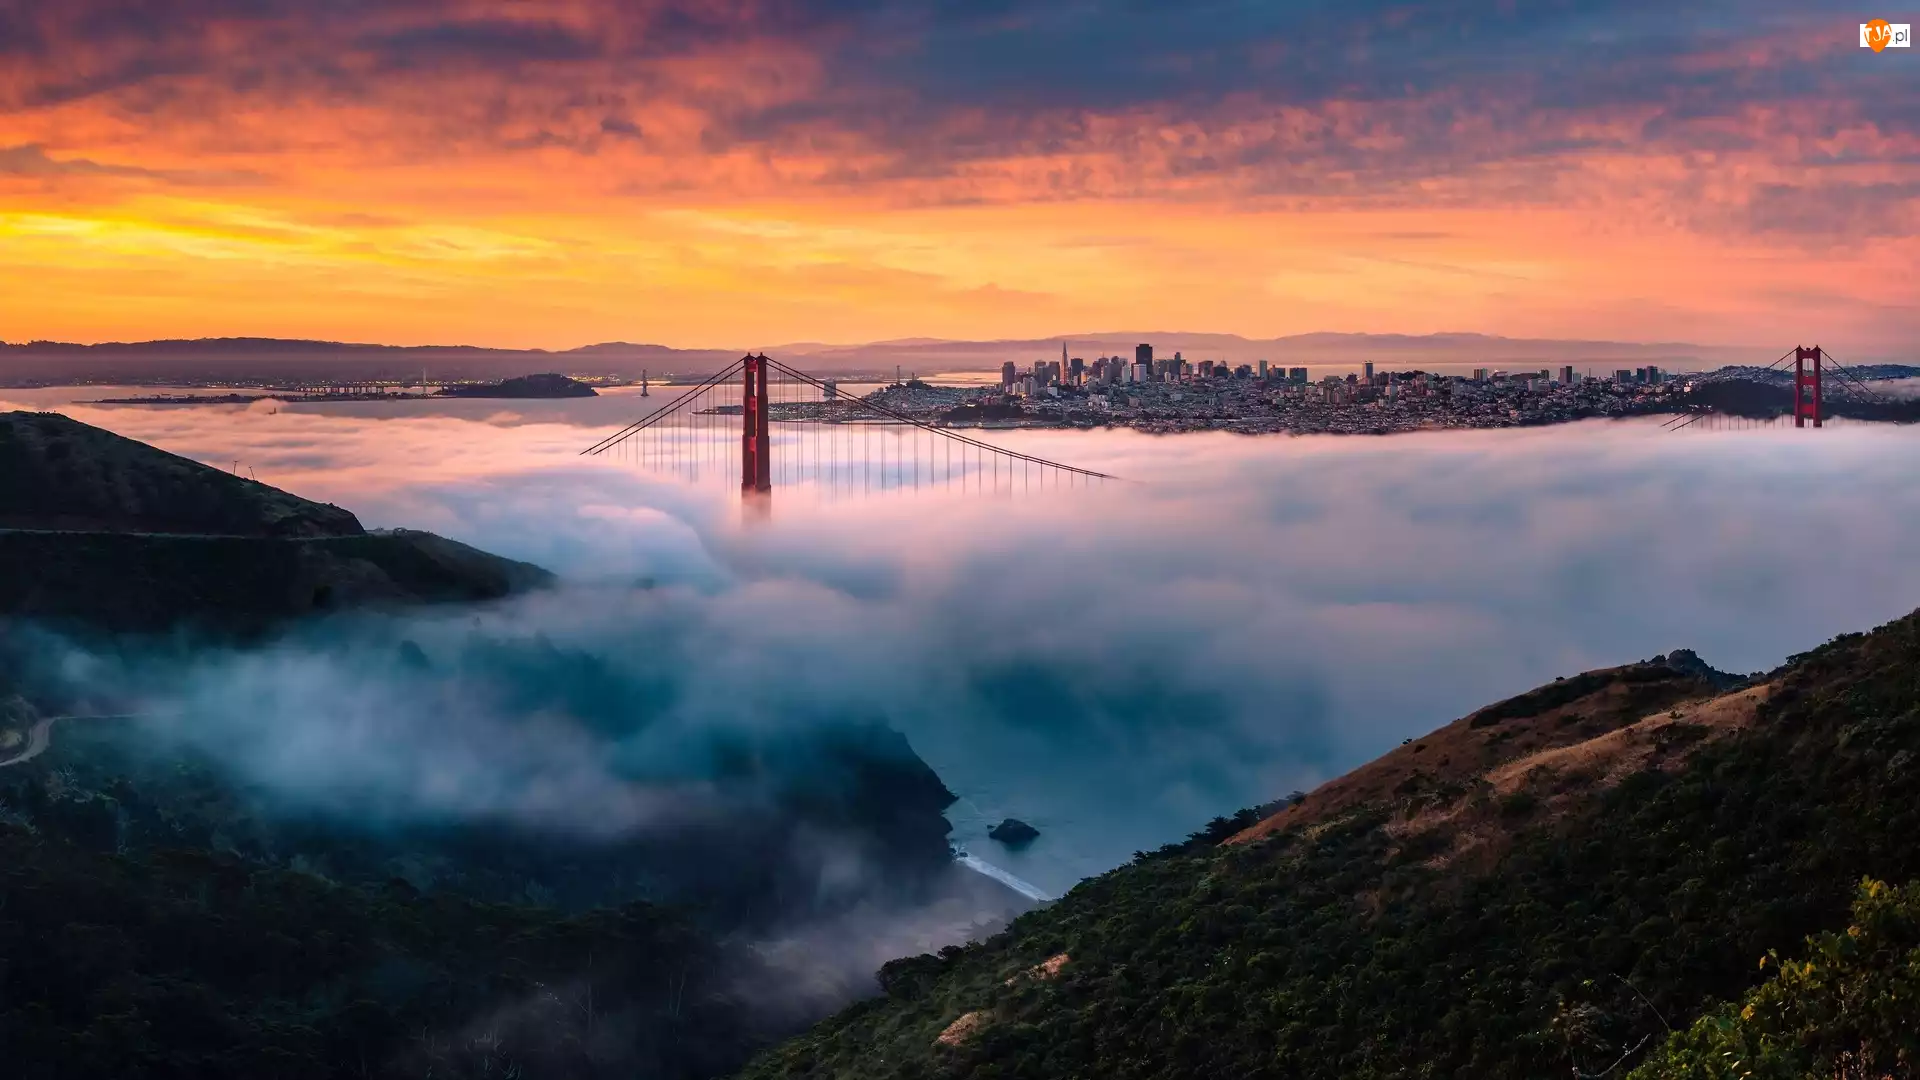 Stany Zjednoczone, Most Golden Gate Bridge, Mgła, Kalifornia